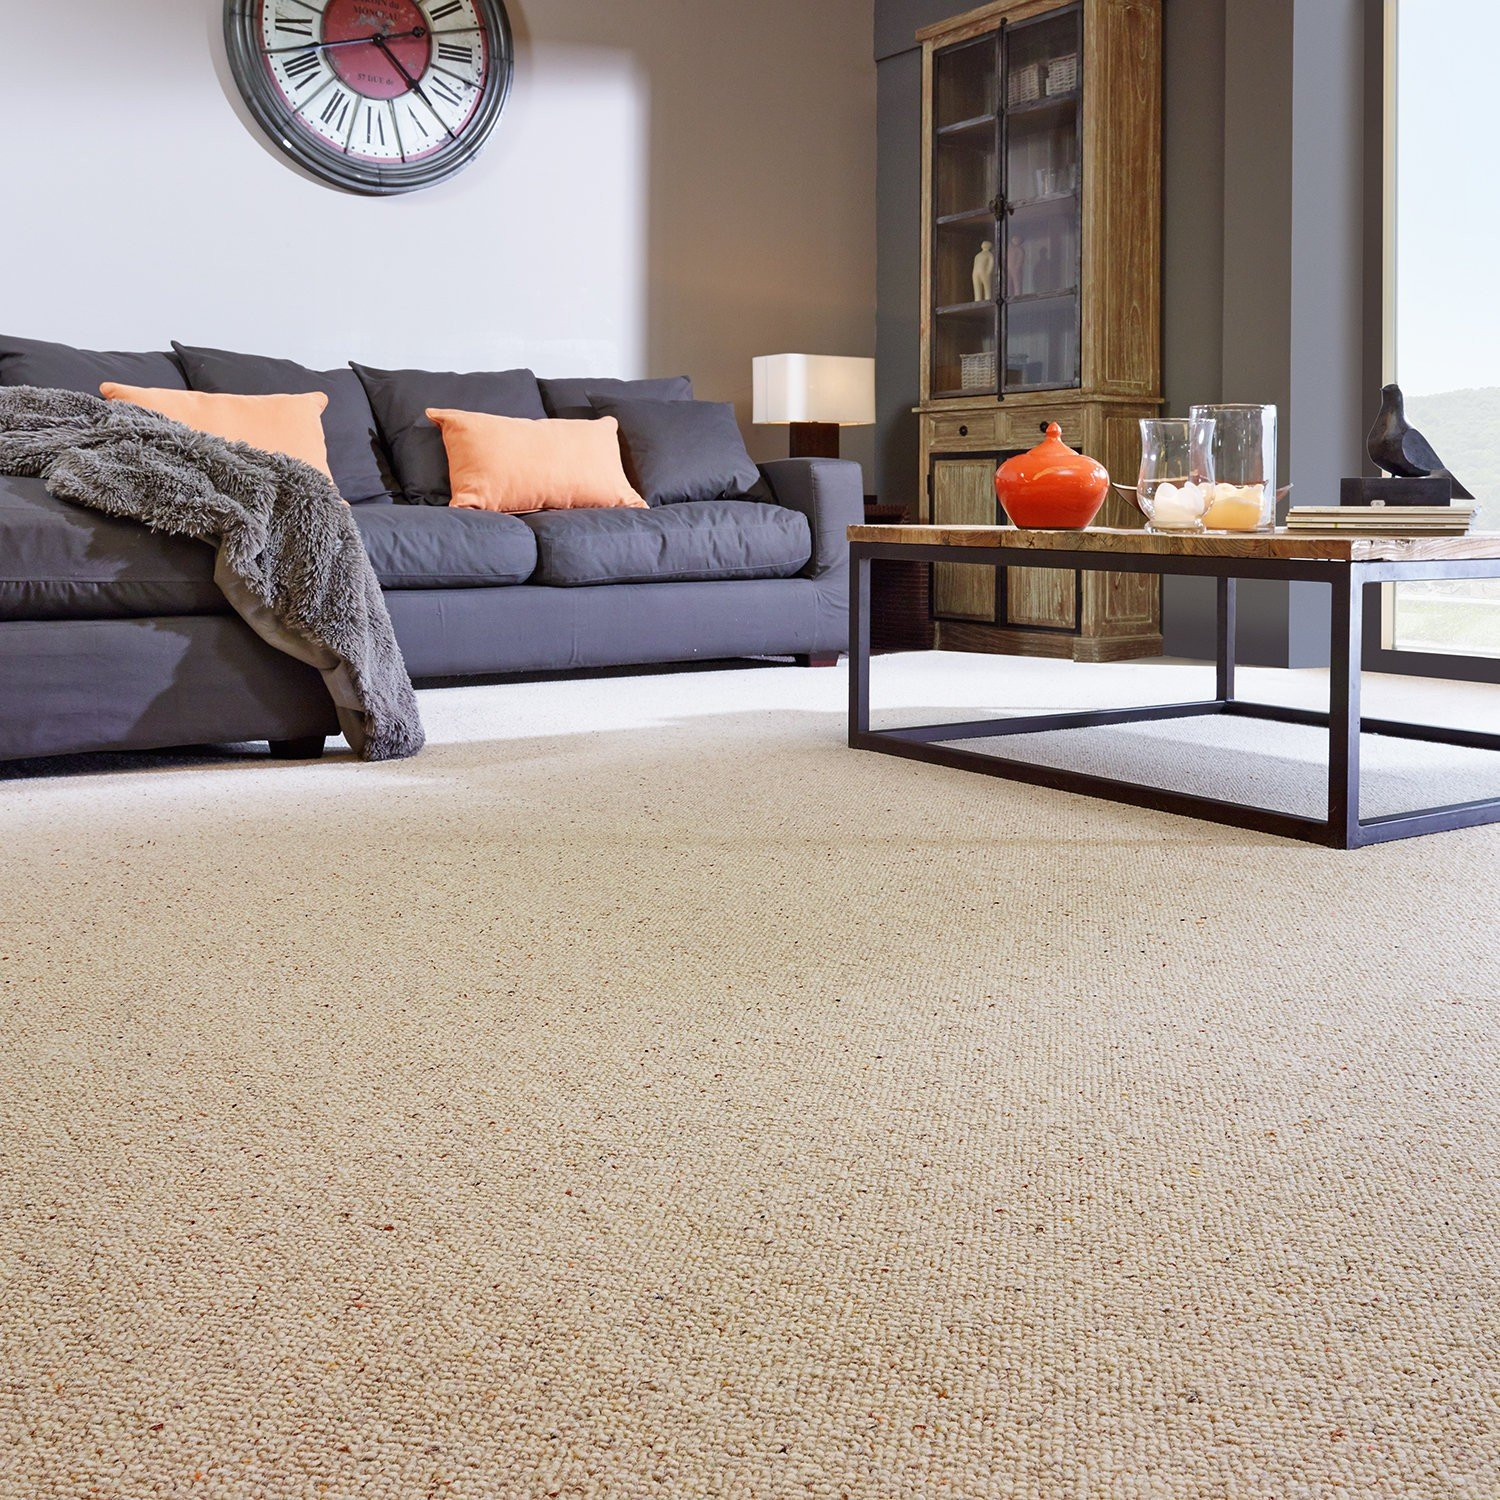 Living Room Carpet Ideas Elegant 10 Benefits Of Having Carpet For Living Room Of Living Room Carpet Ideas 